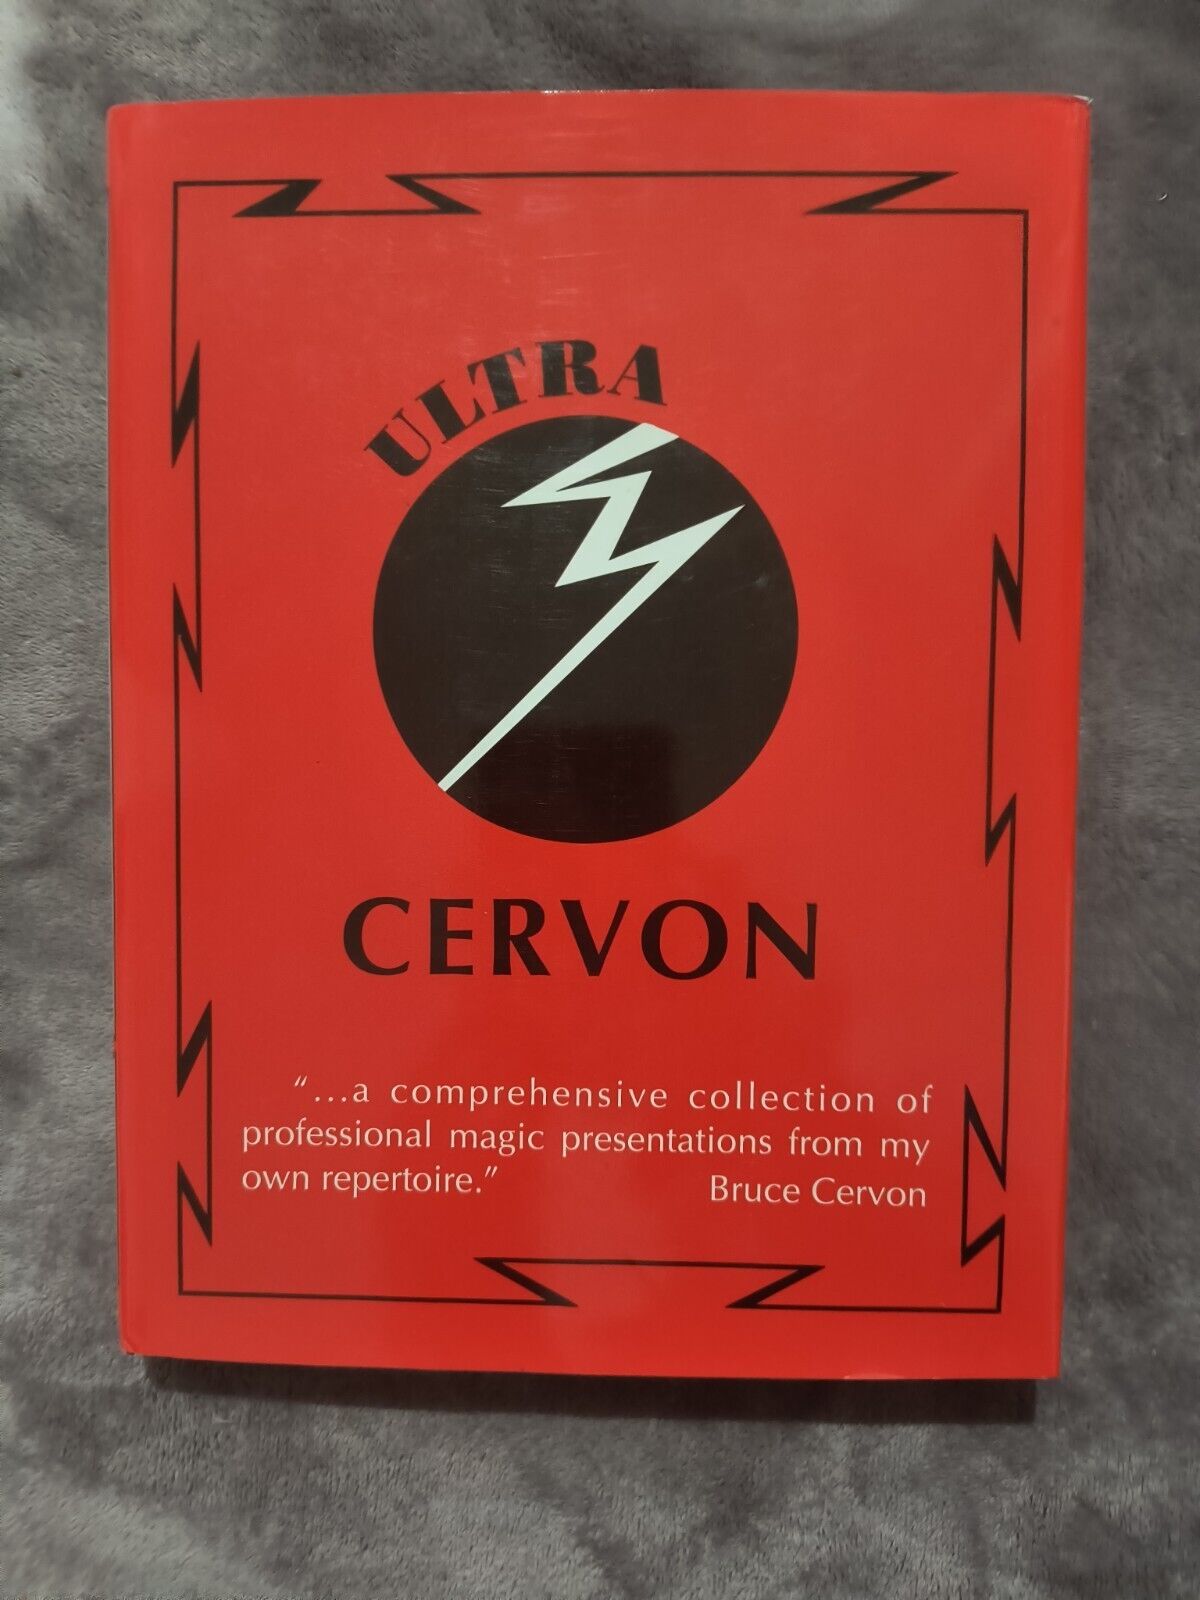 Ultra Cervon by Bruce Cervon - Hardcover Magic Book